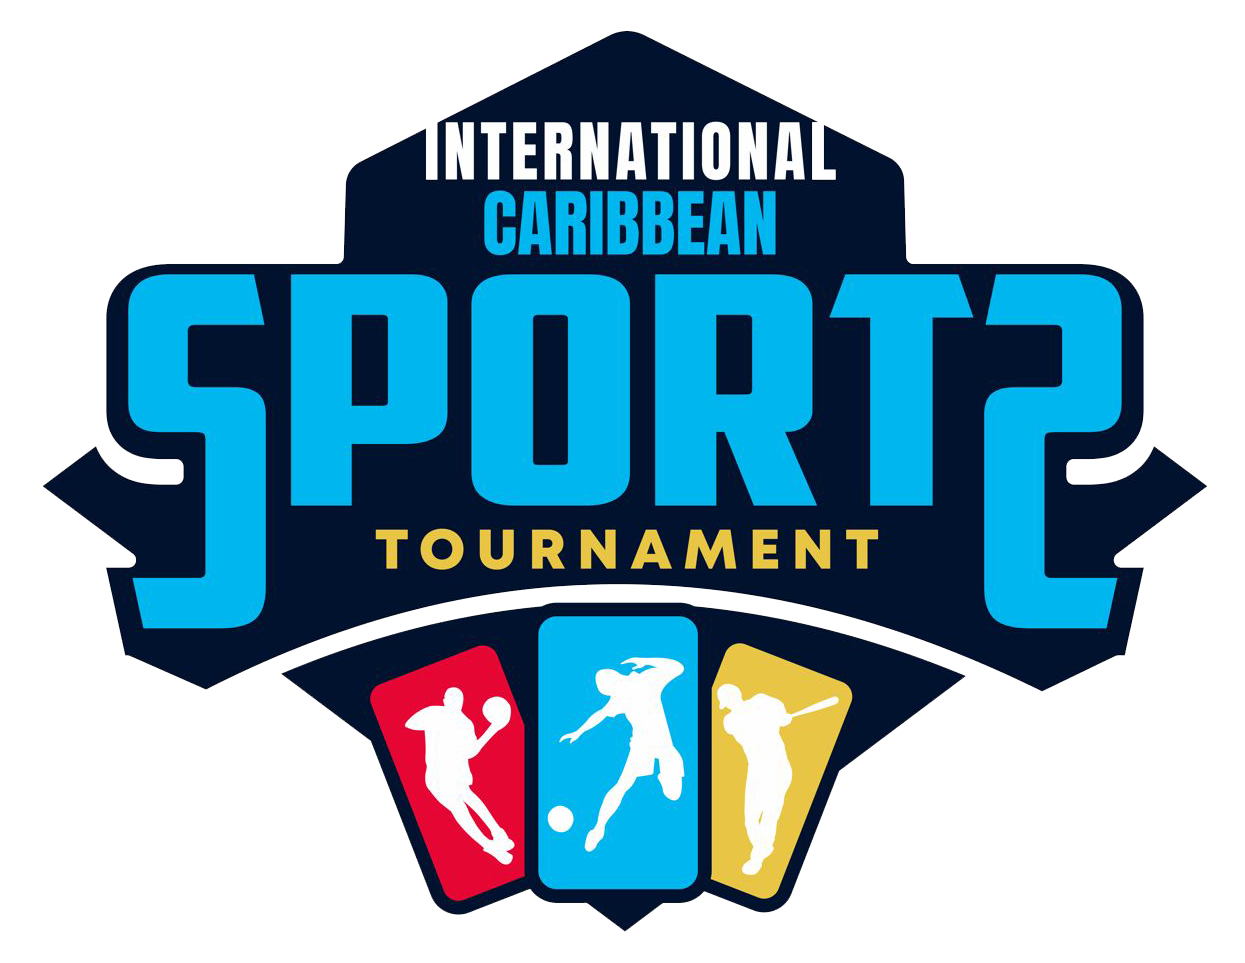 International Caribbean Sports